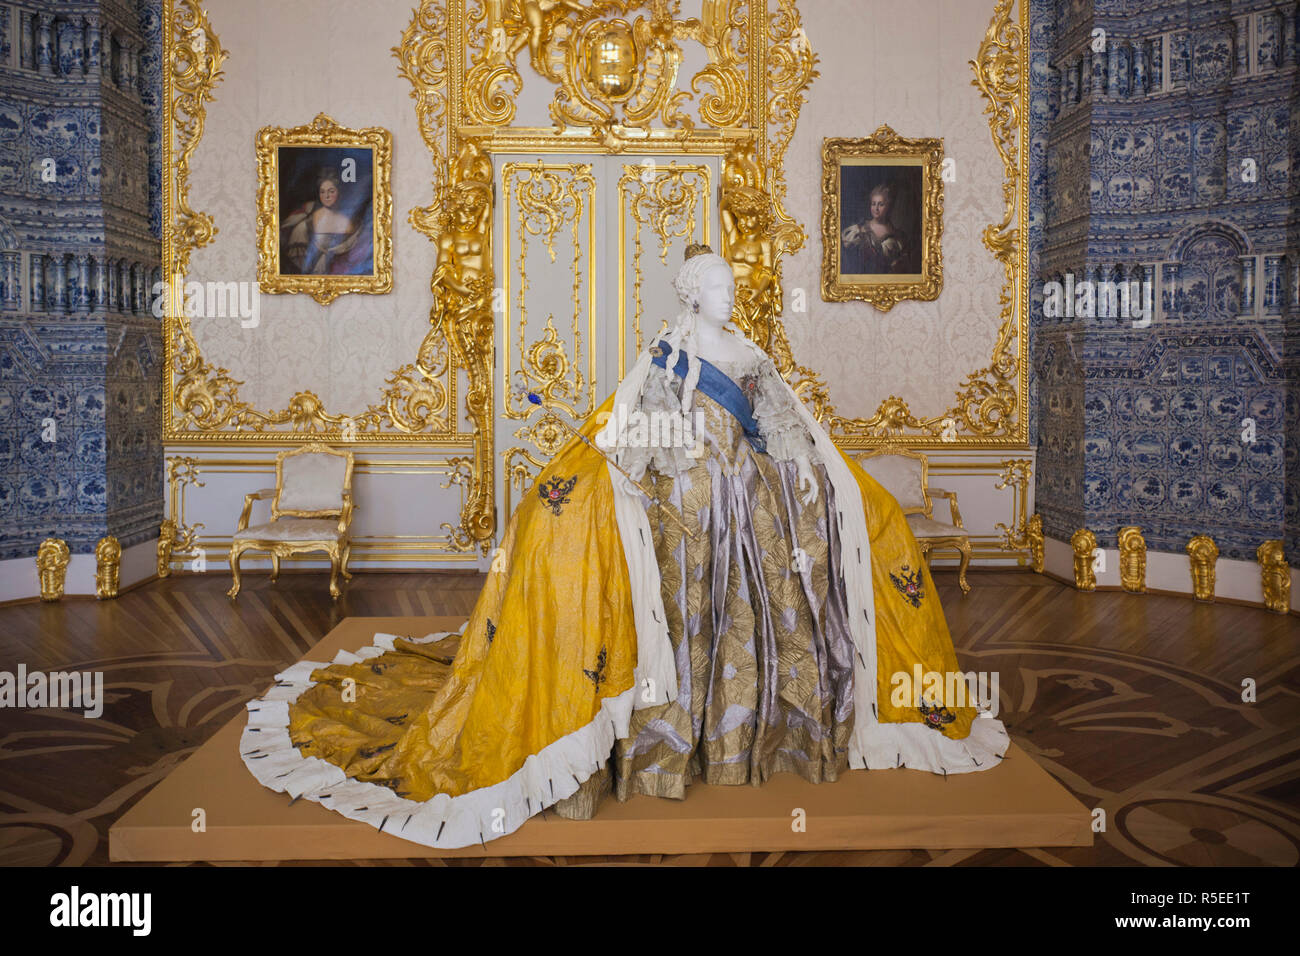 Russia, St. Petersburg, Pushkin-Tsarskoye Selo, Catherine Palace, Ball Gown of Czarina Catherine the Great Stock Photo